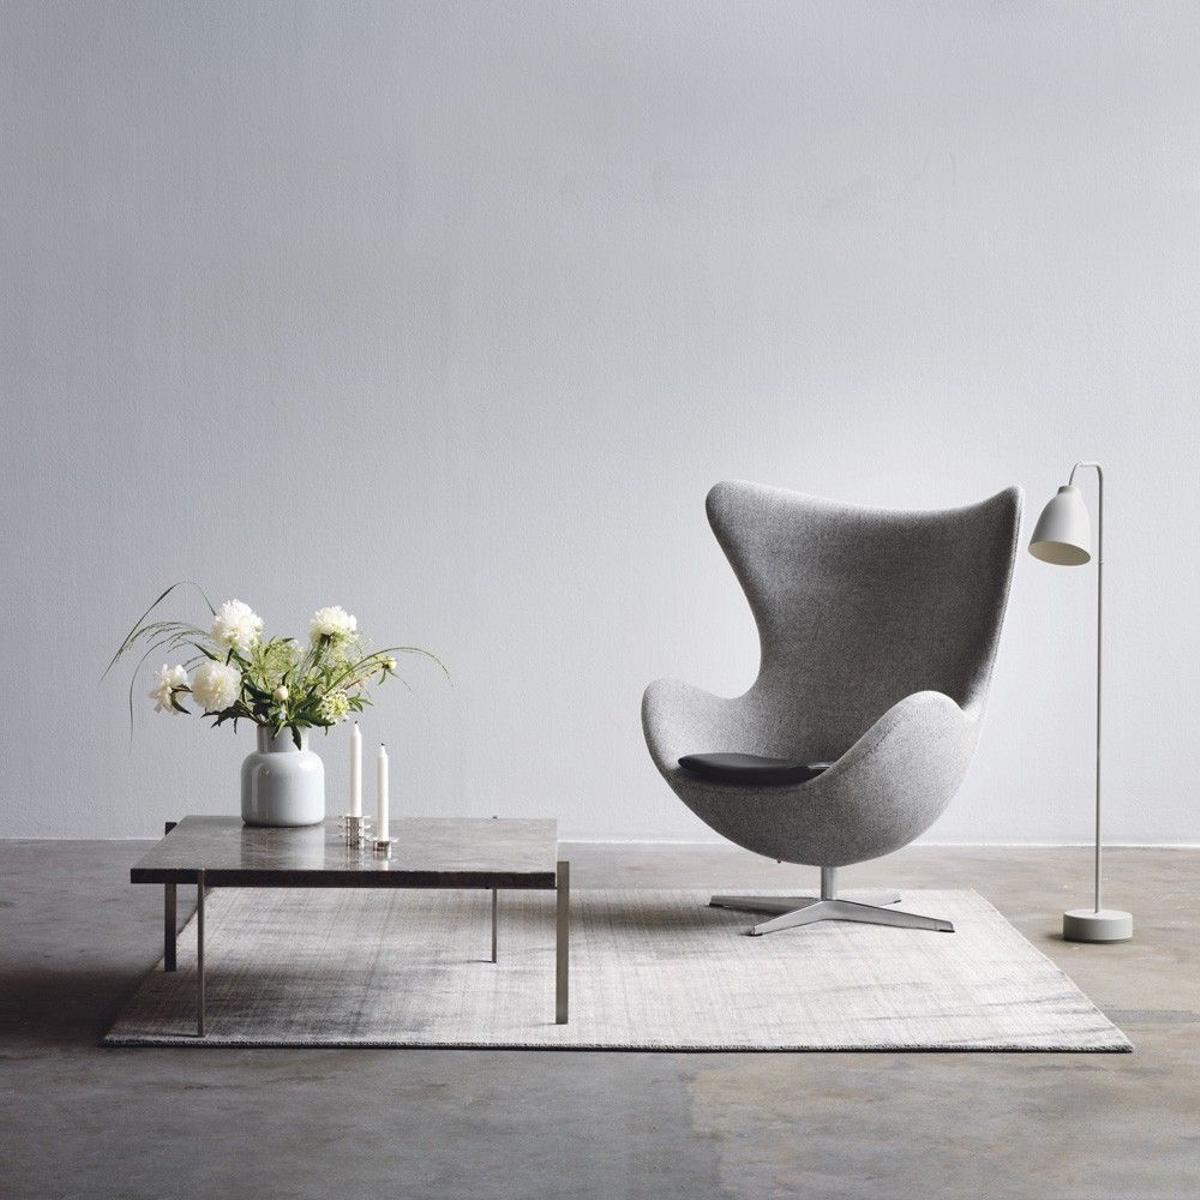 El modelo 'Hallingdal' de la 'Egg chair': puro glamour